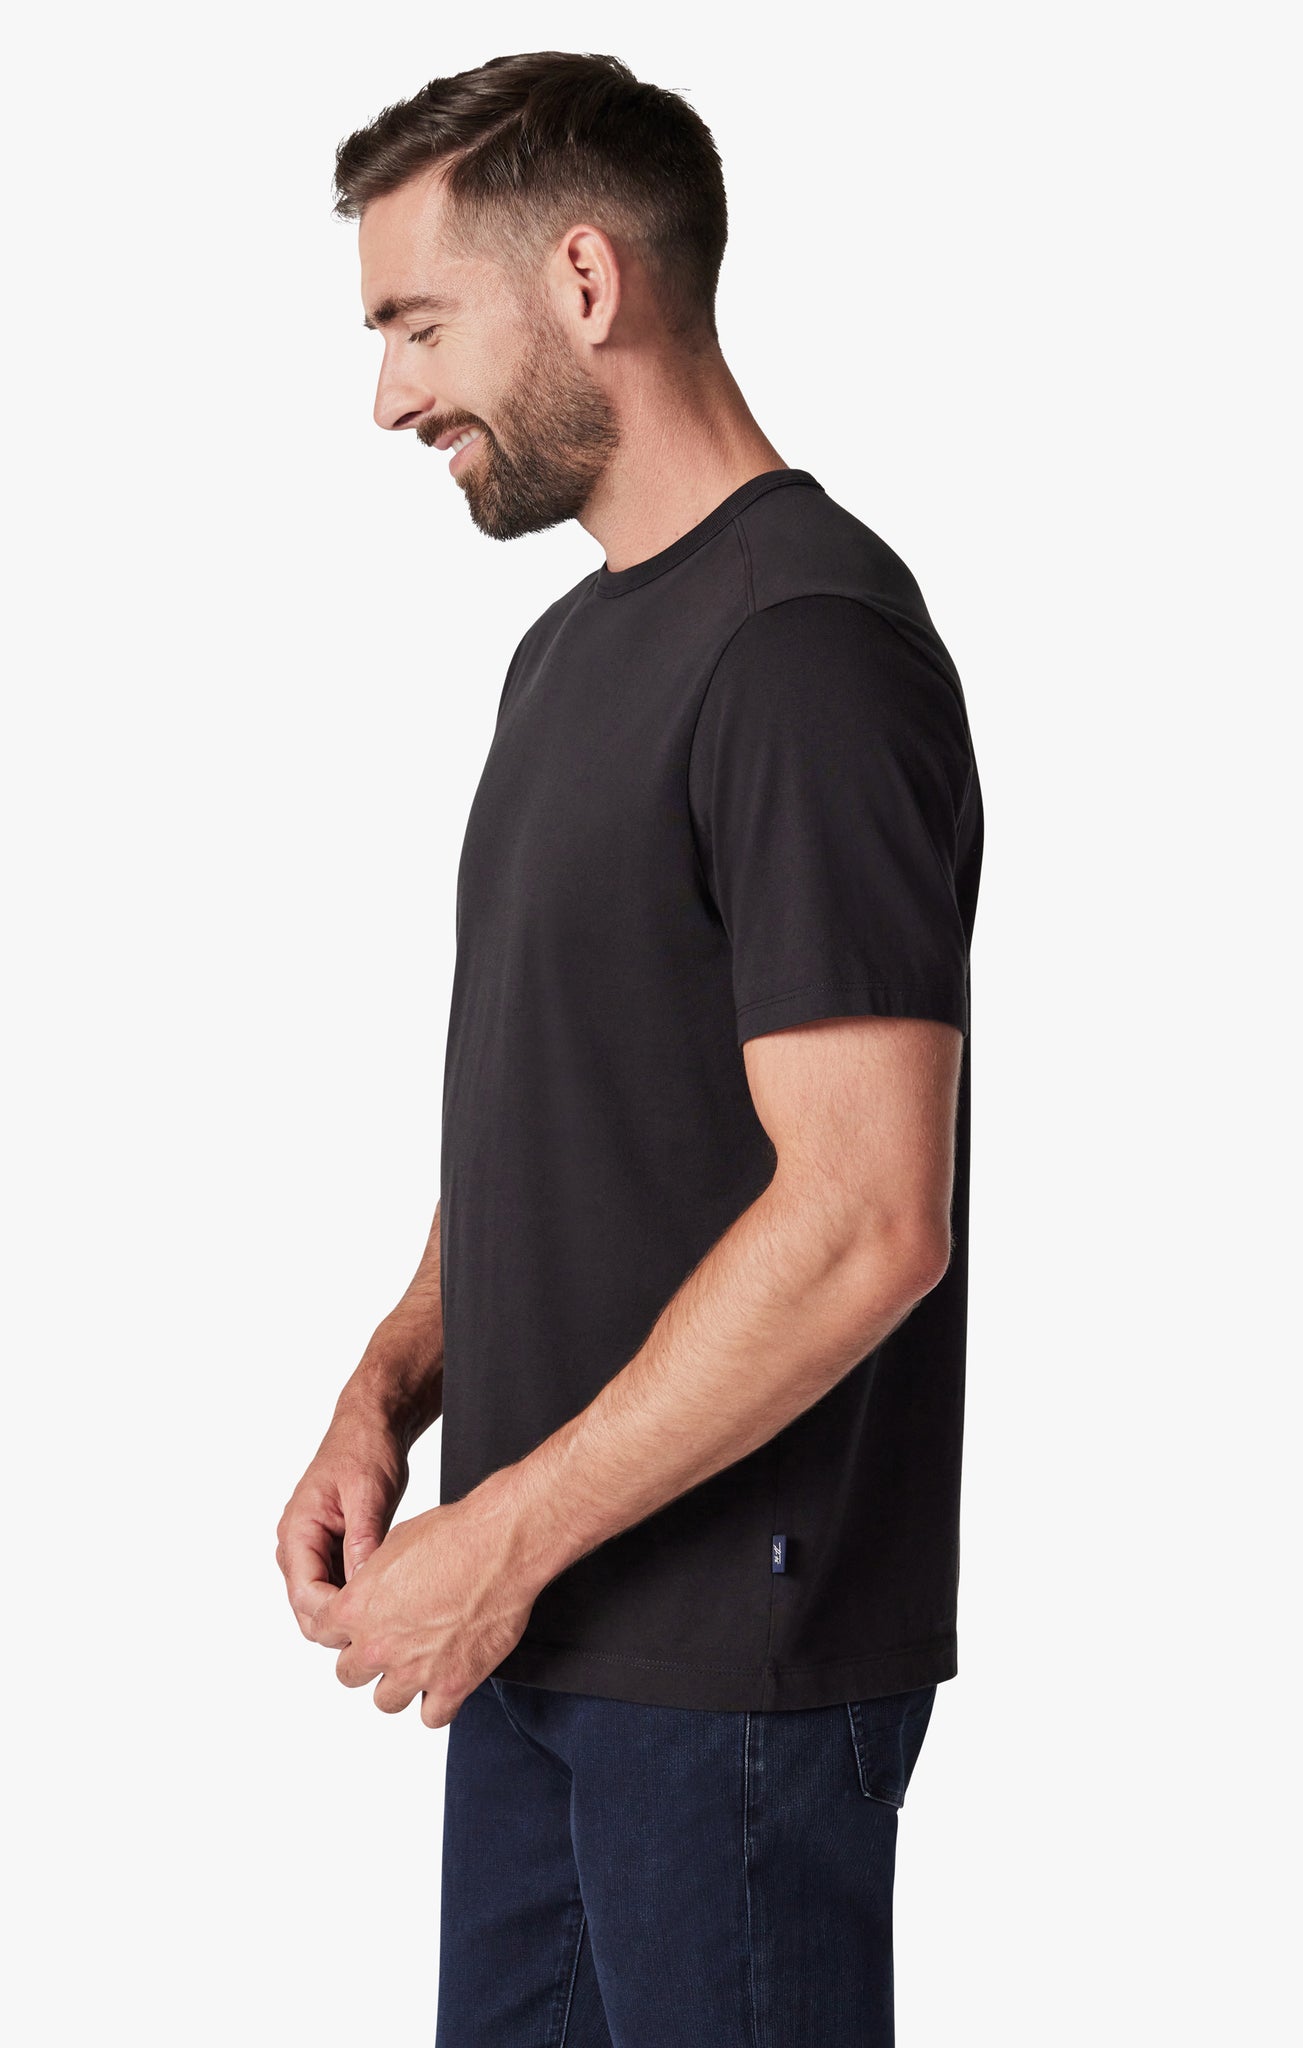 Basic Crew Neck T-Shirt in Black